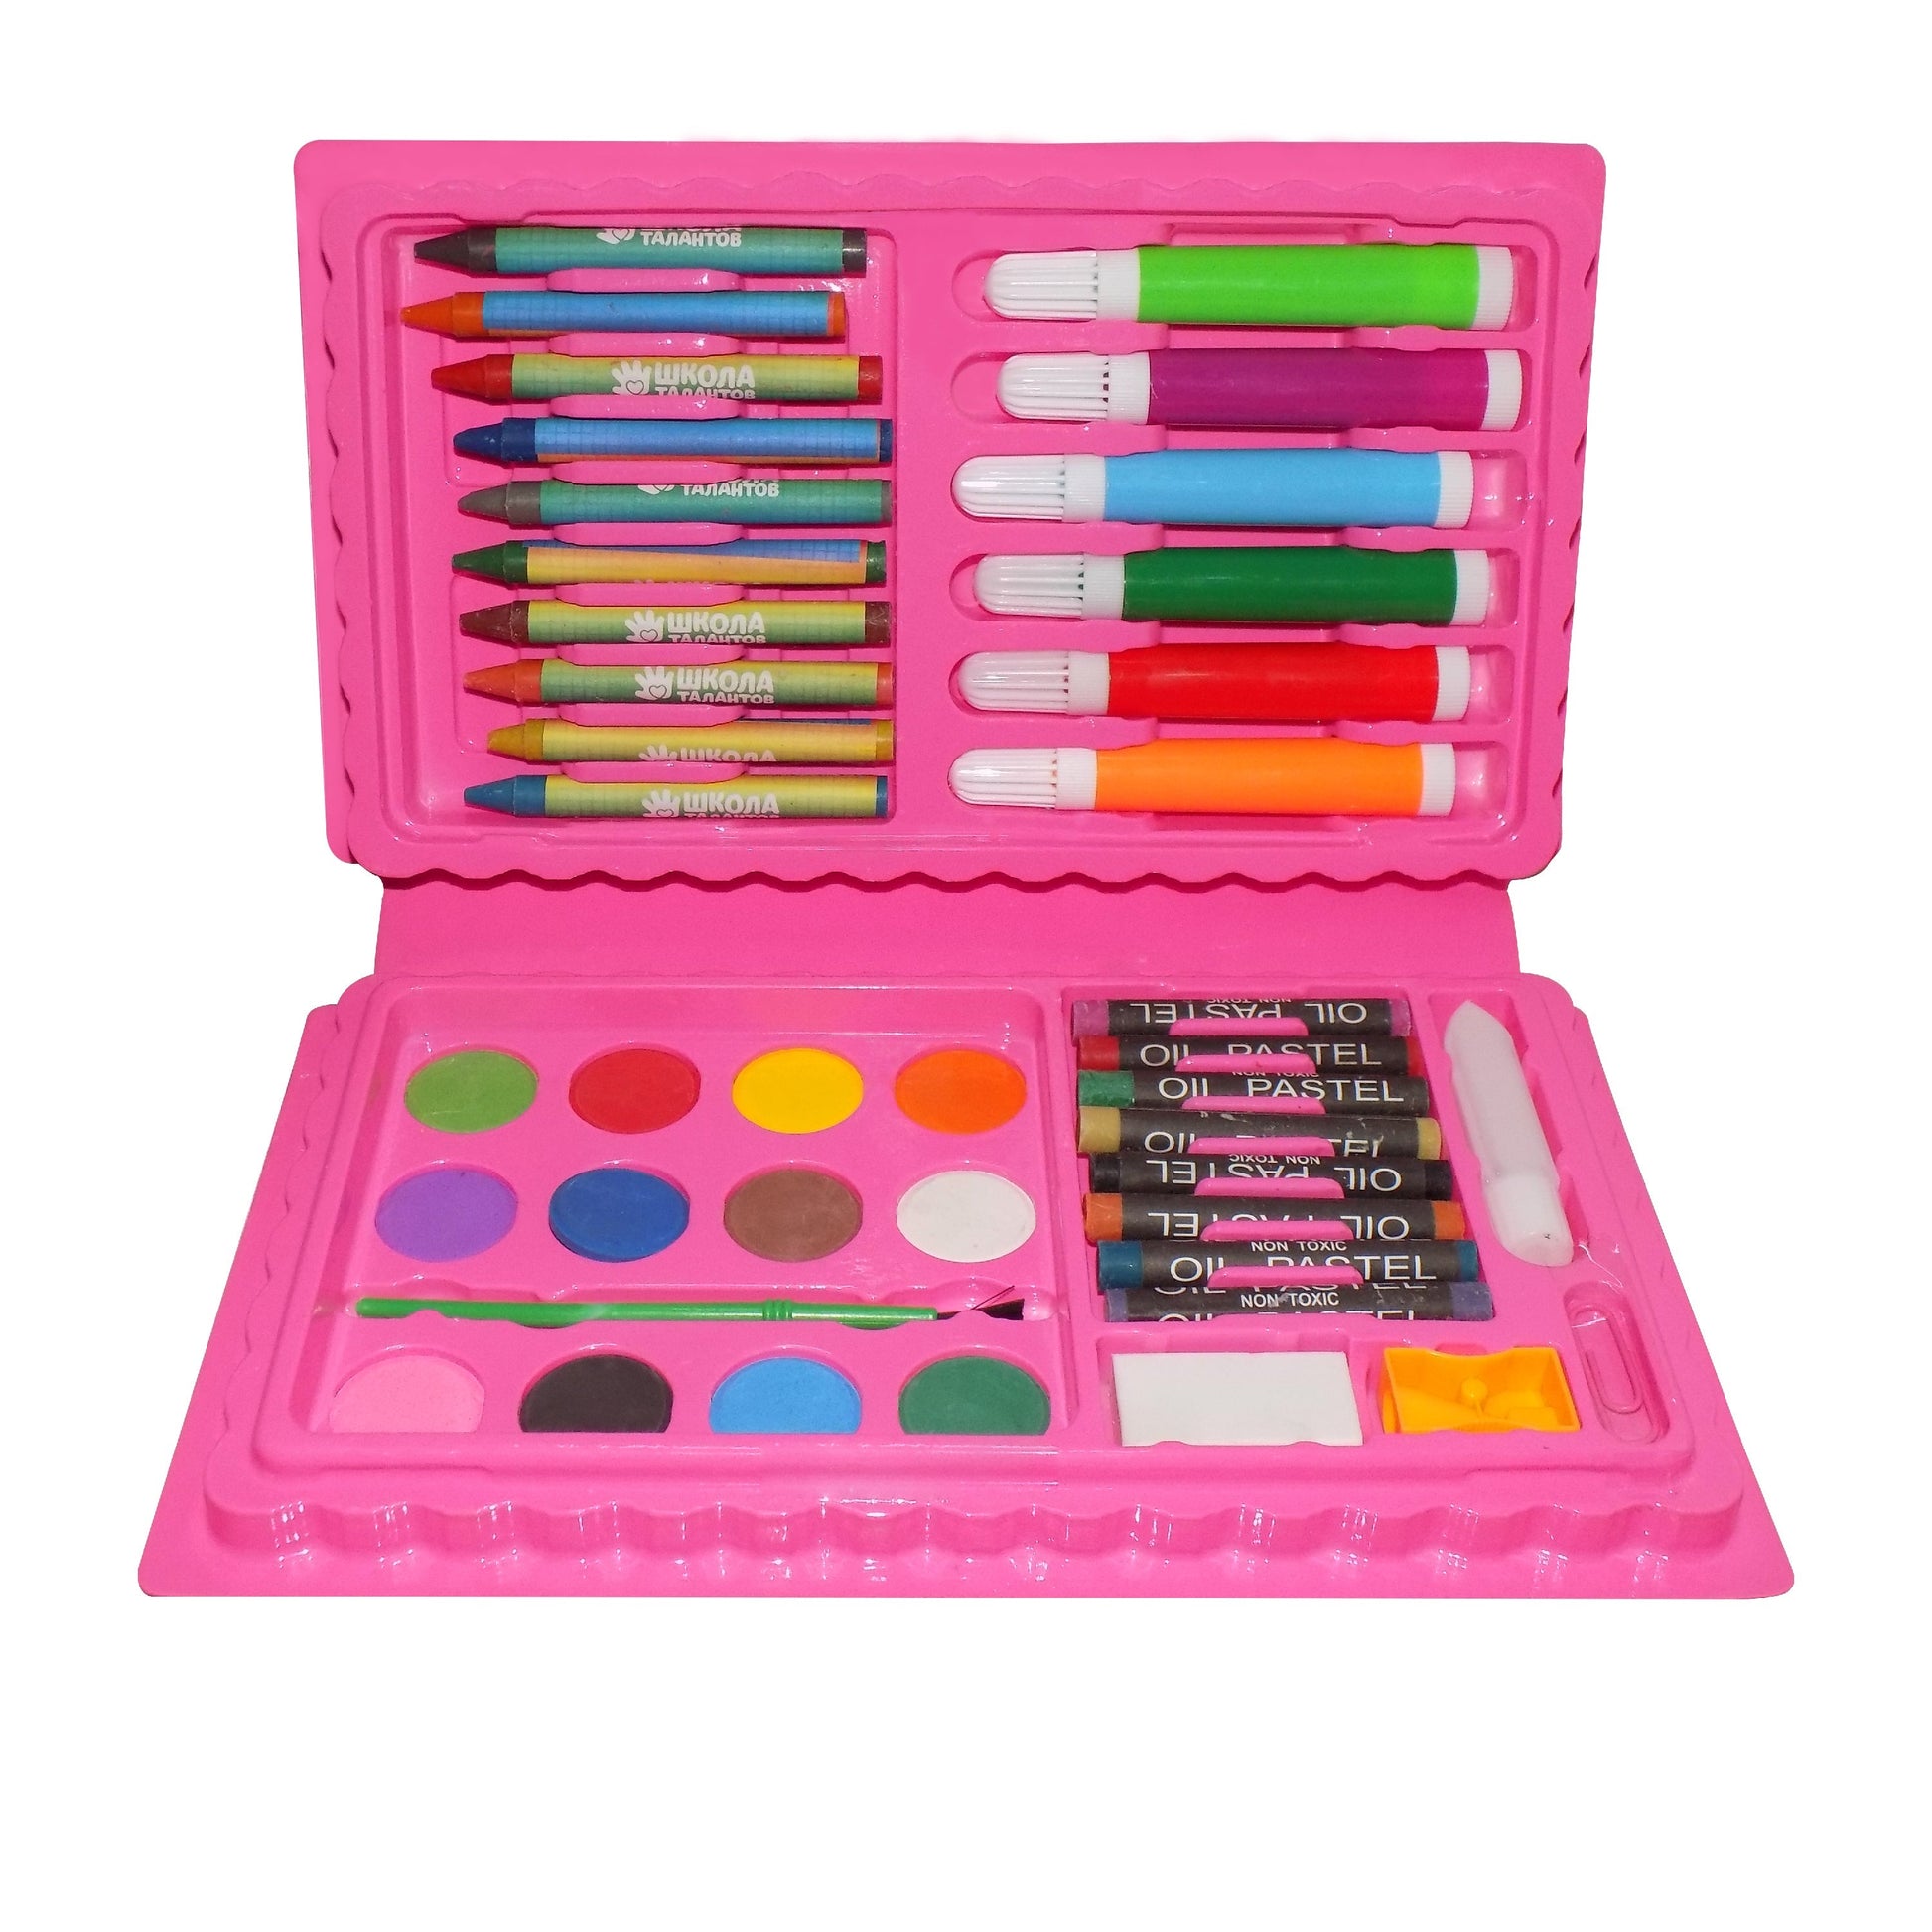 1092A Coloring Combo Colors Box Color Pencil, Crayons, Water Color, Sketch Pens Set of 42 DeoDap